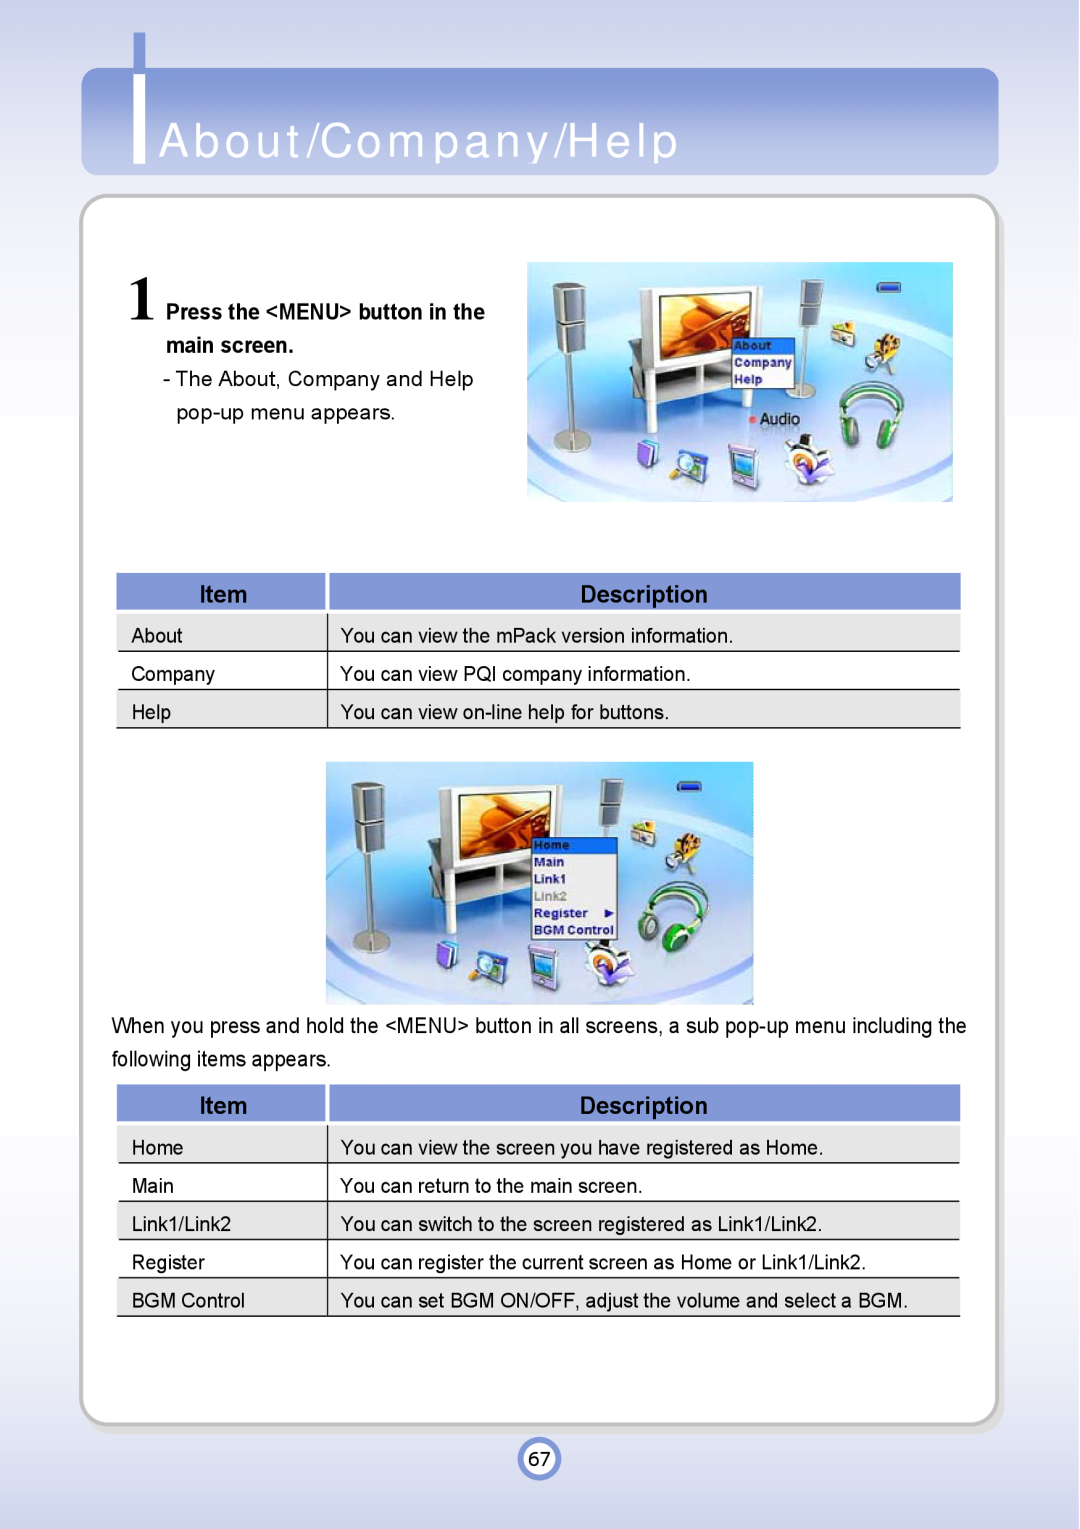 PQI P600 manual About/Company/Help, Description, Press the MENU button in the main screen 